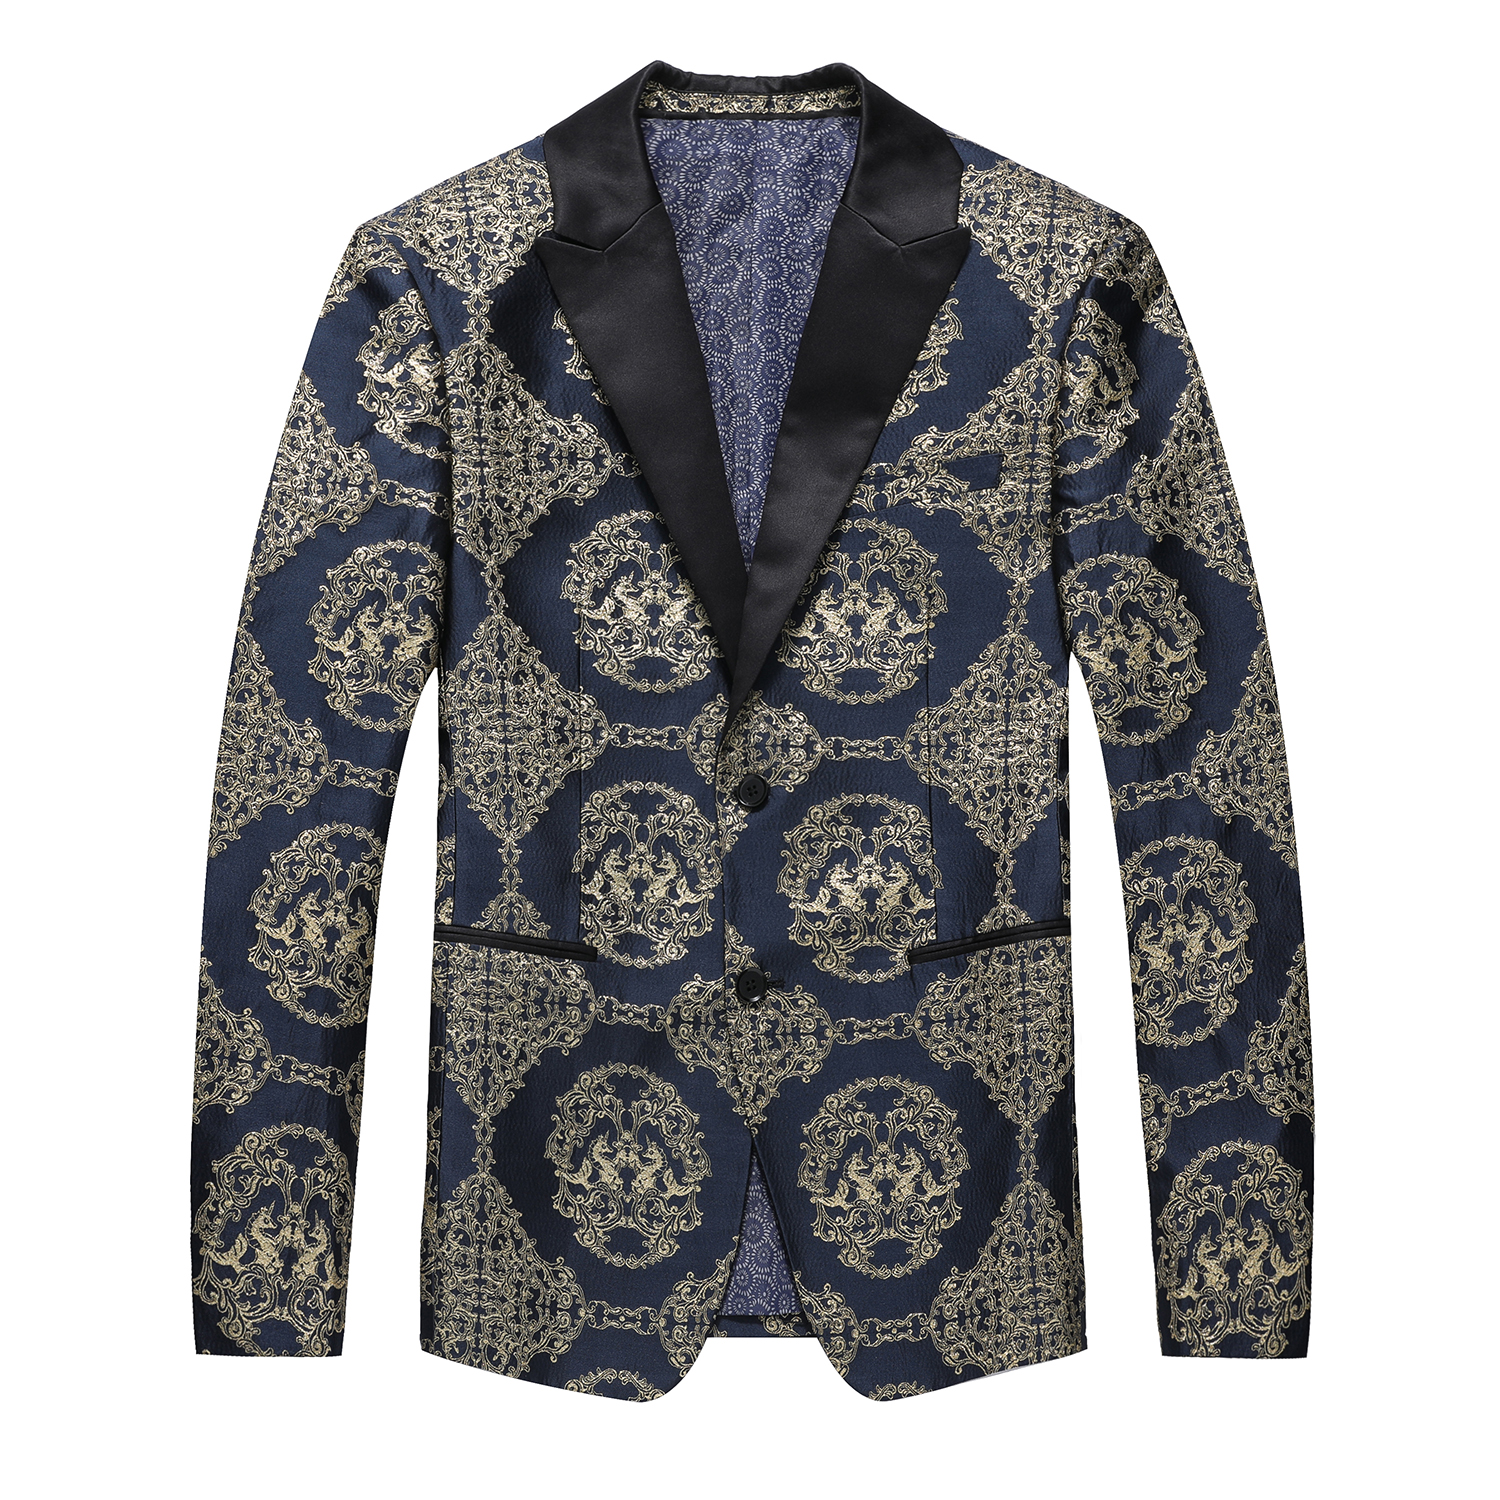 Men’s casual slim fit jacquard suit blazer stylish jacket